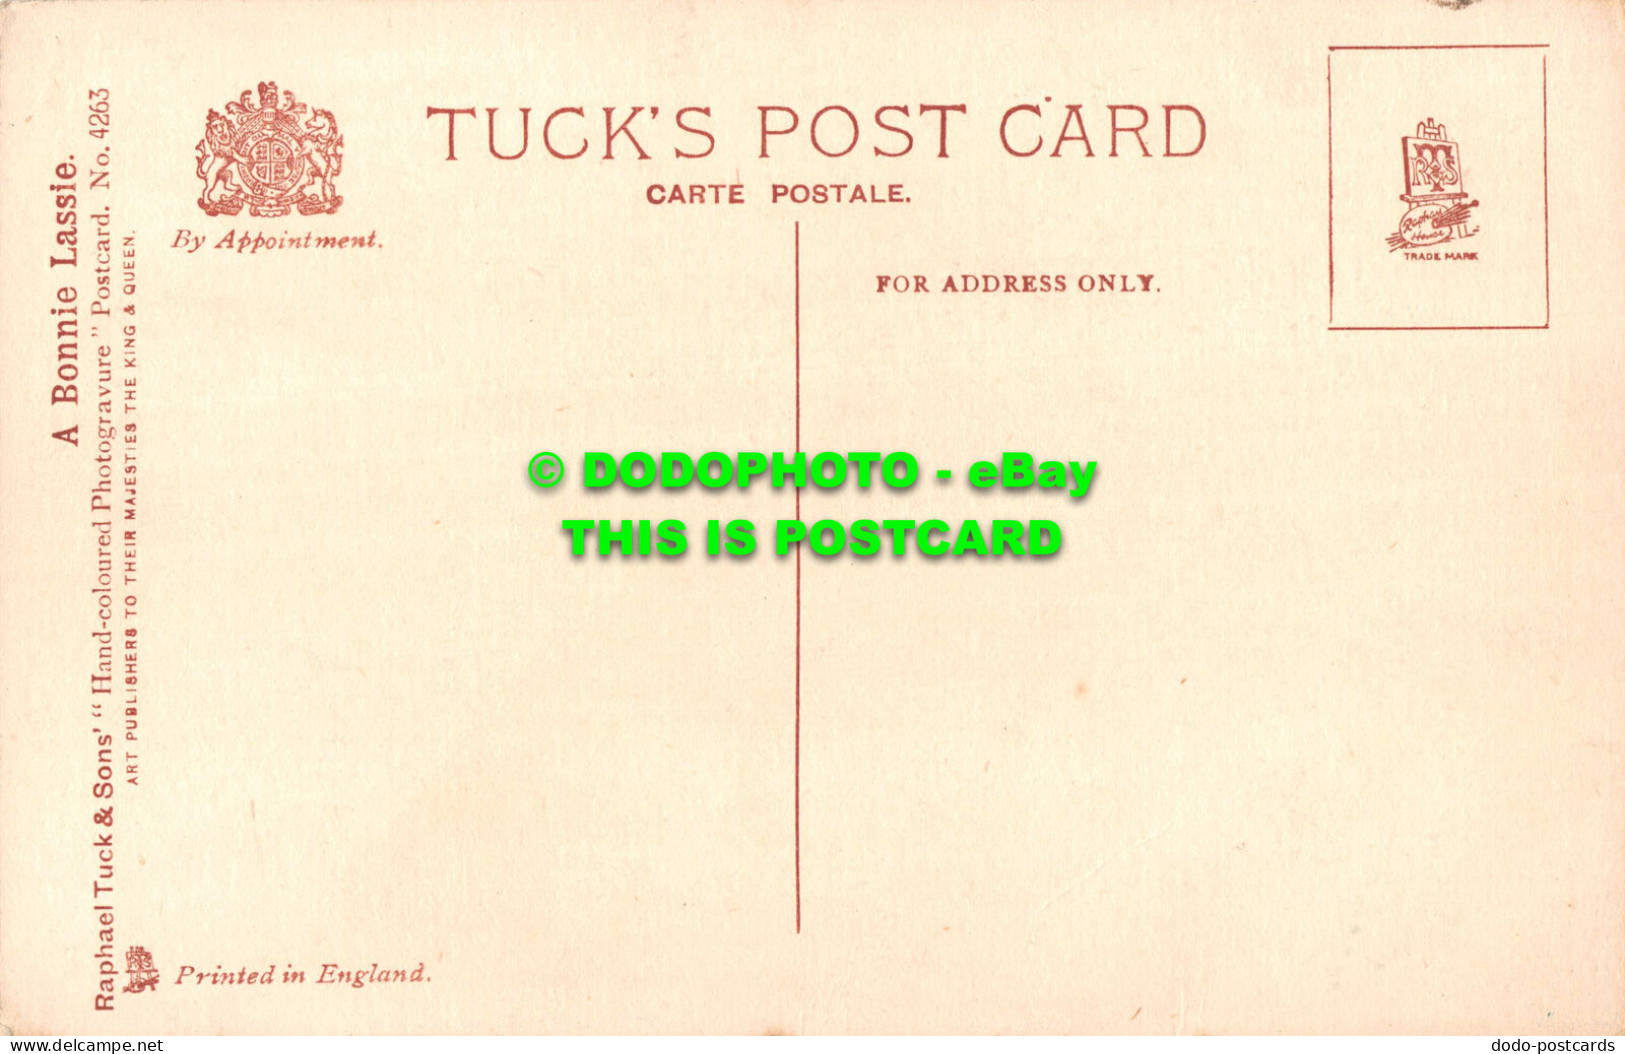 R548017 Youre A Bonnie Lassie. Tuck. Hand Coloured Photogravure Postcard No. 426 - Monde